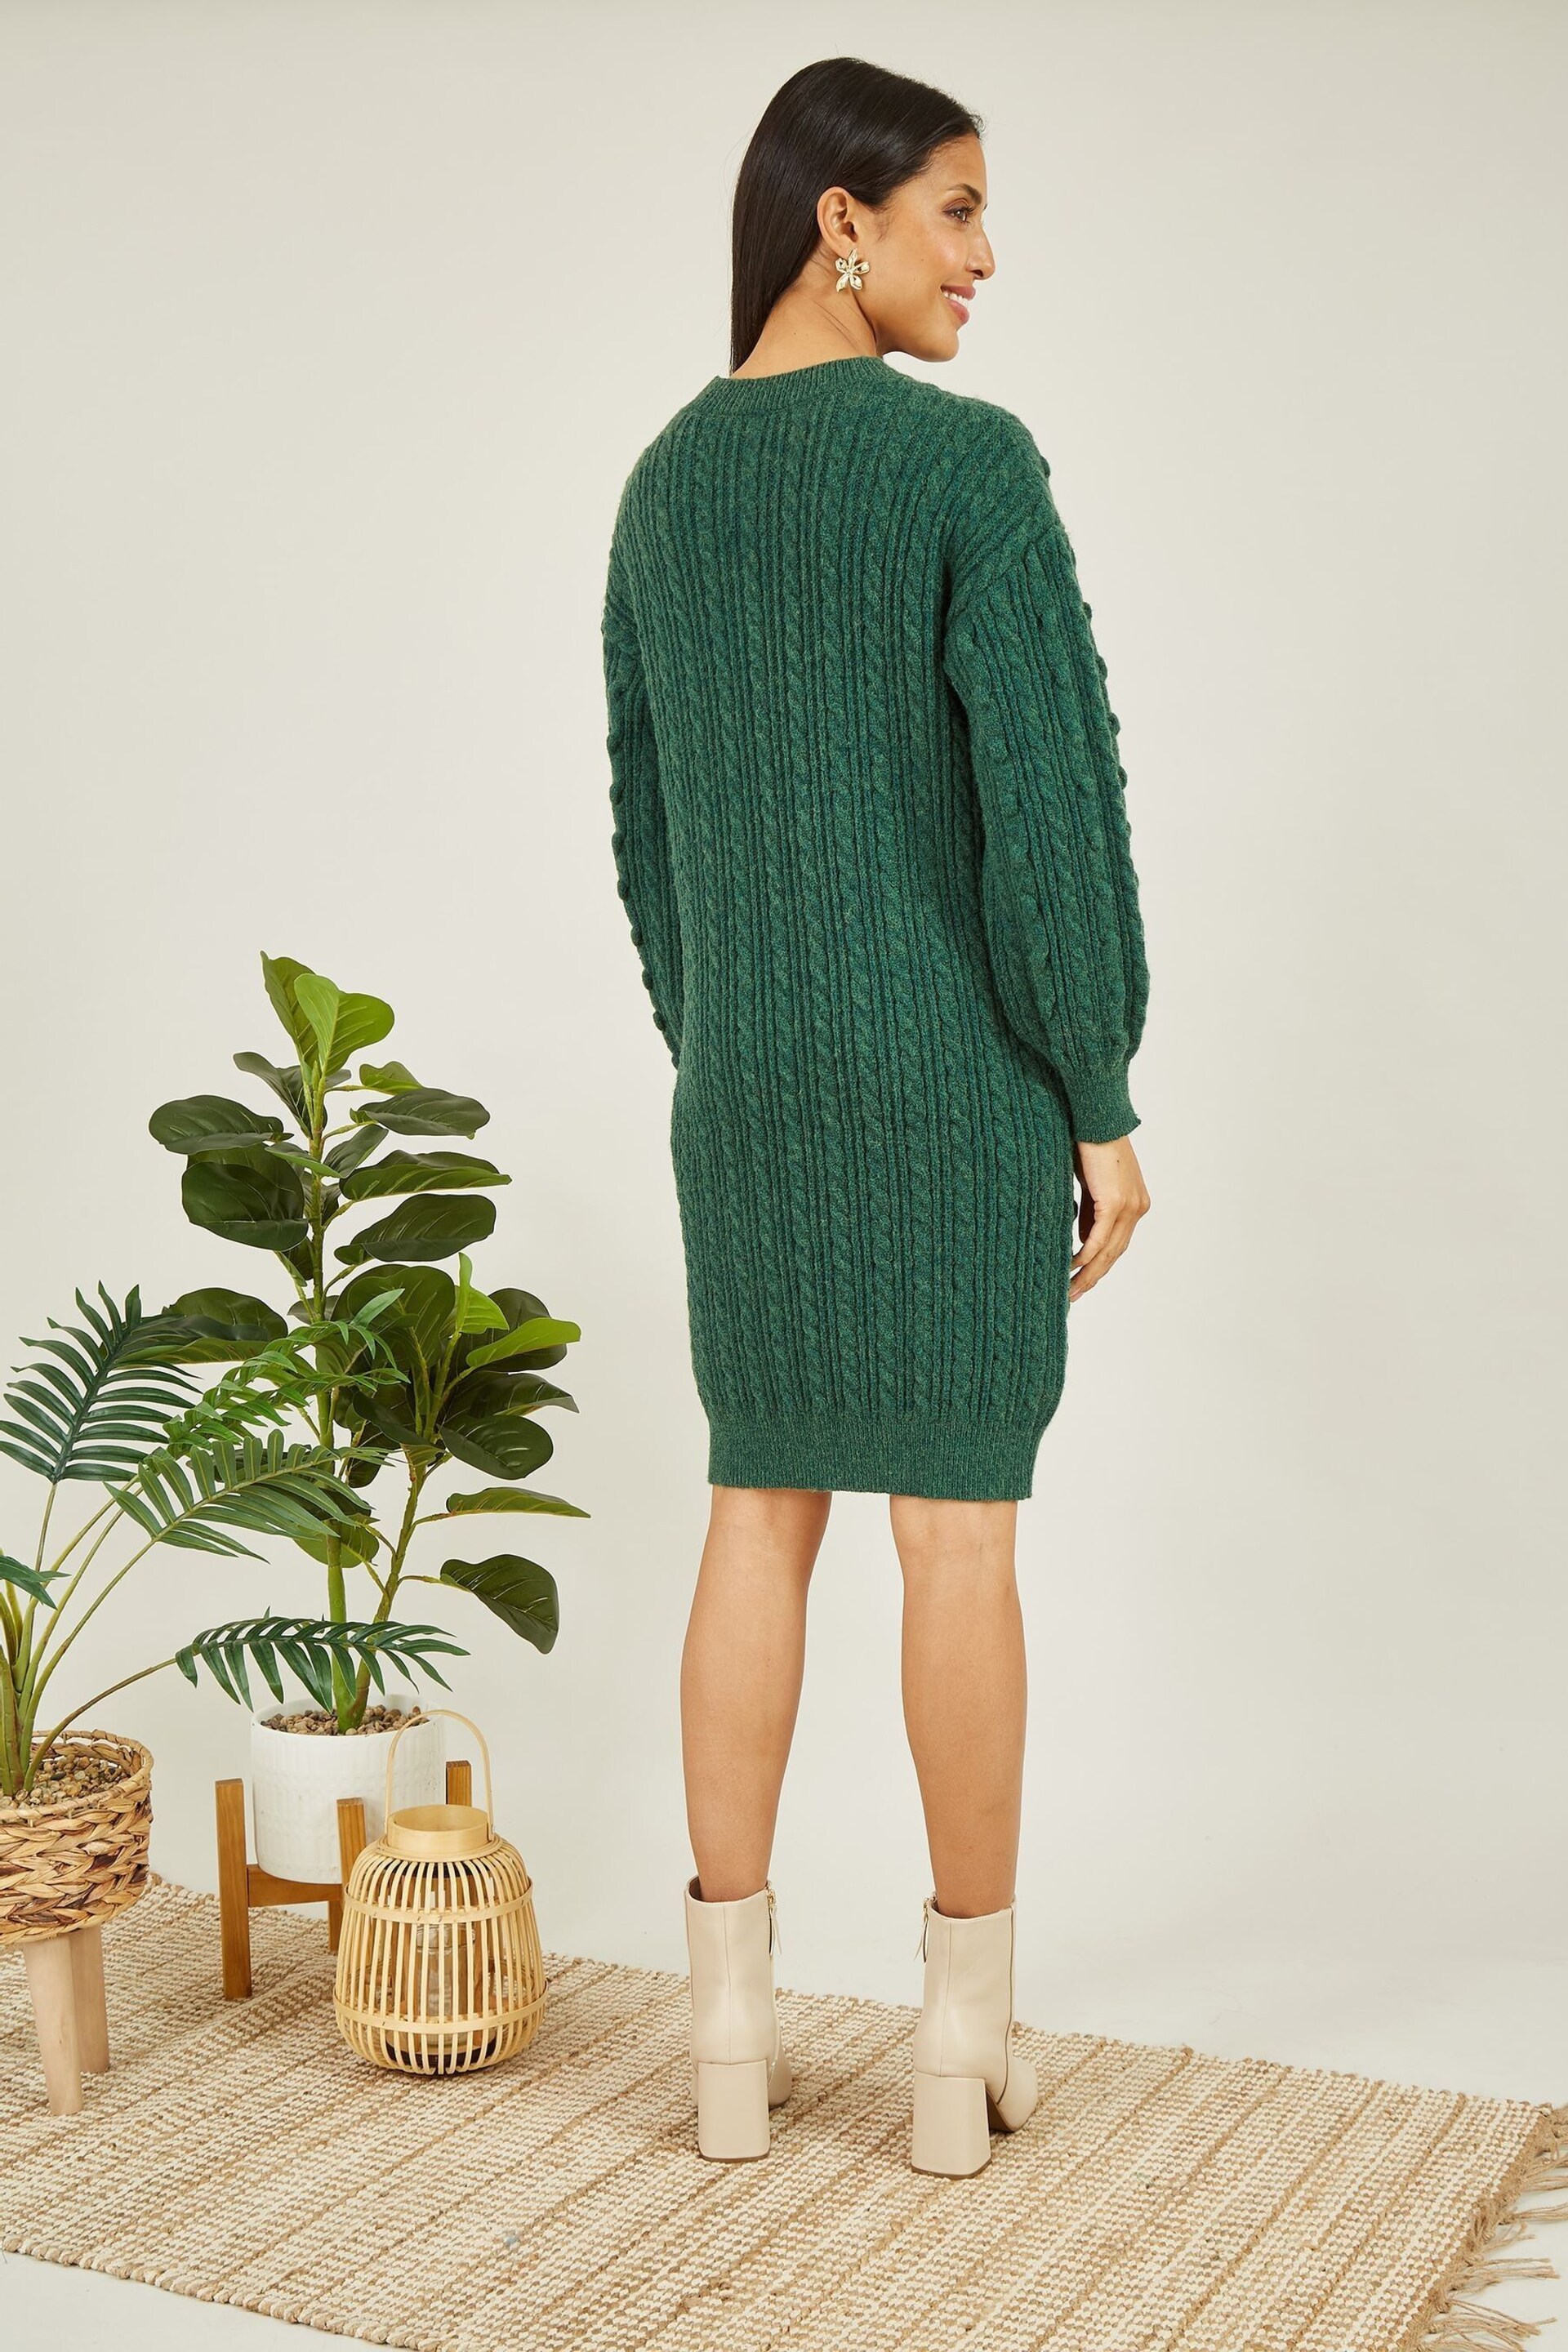 Yumi Green Cable Knit Tunic Dress - Image 4 of 5